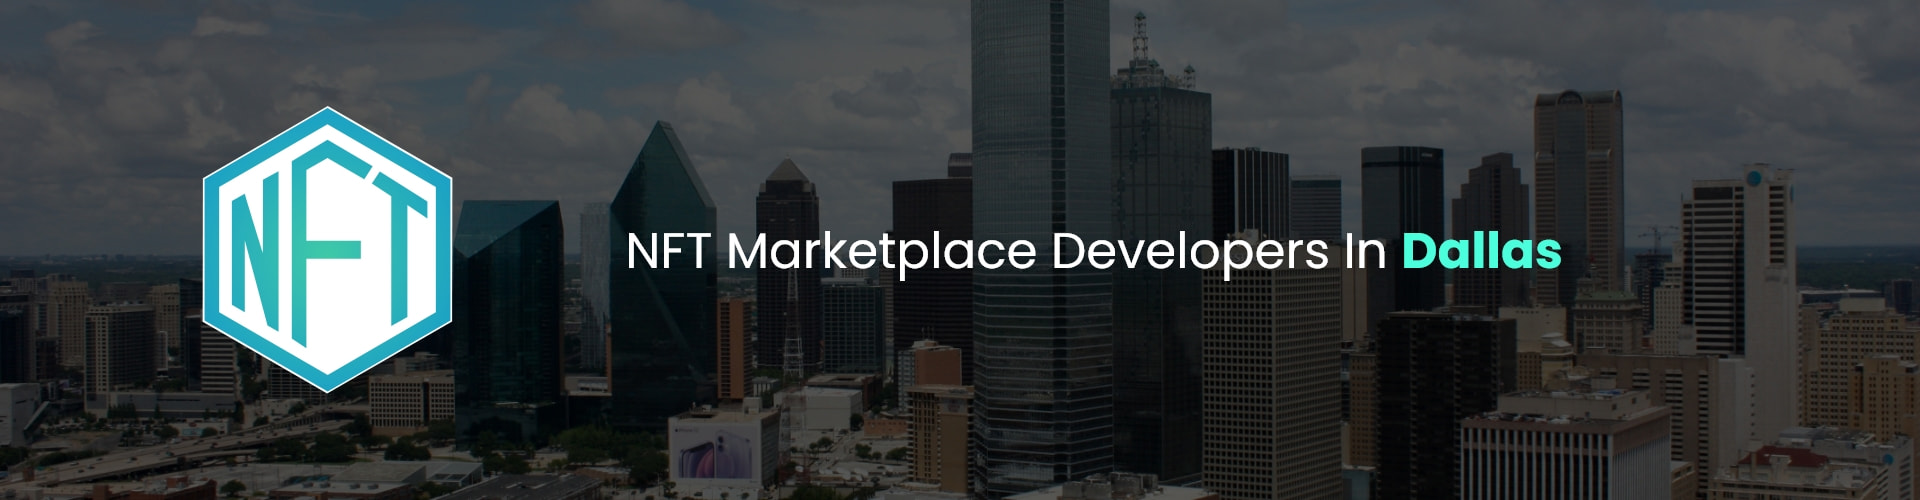 hire nft marketplace developers in dallas